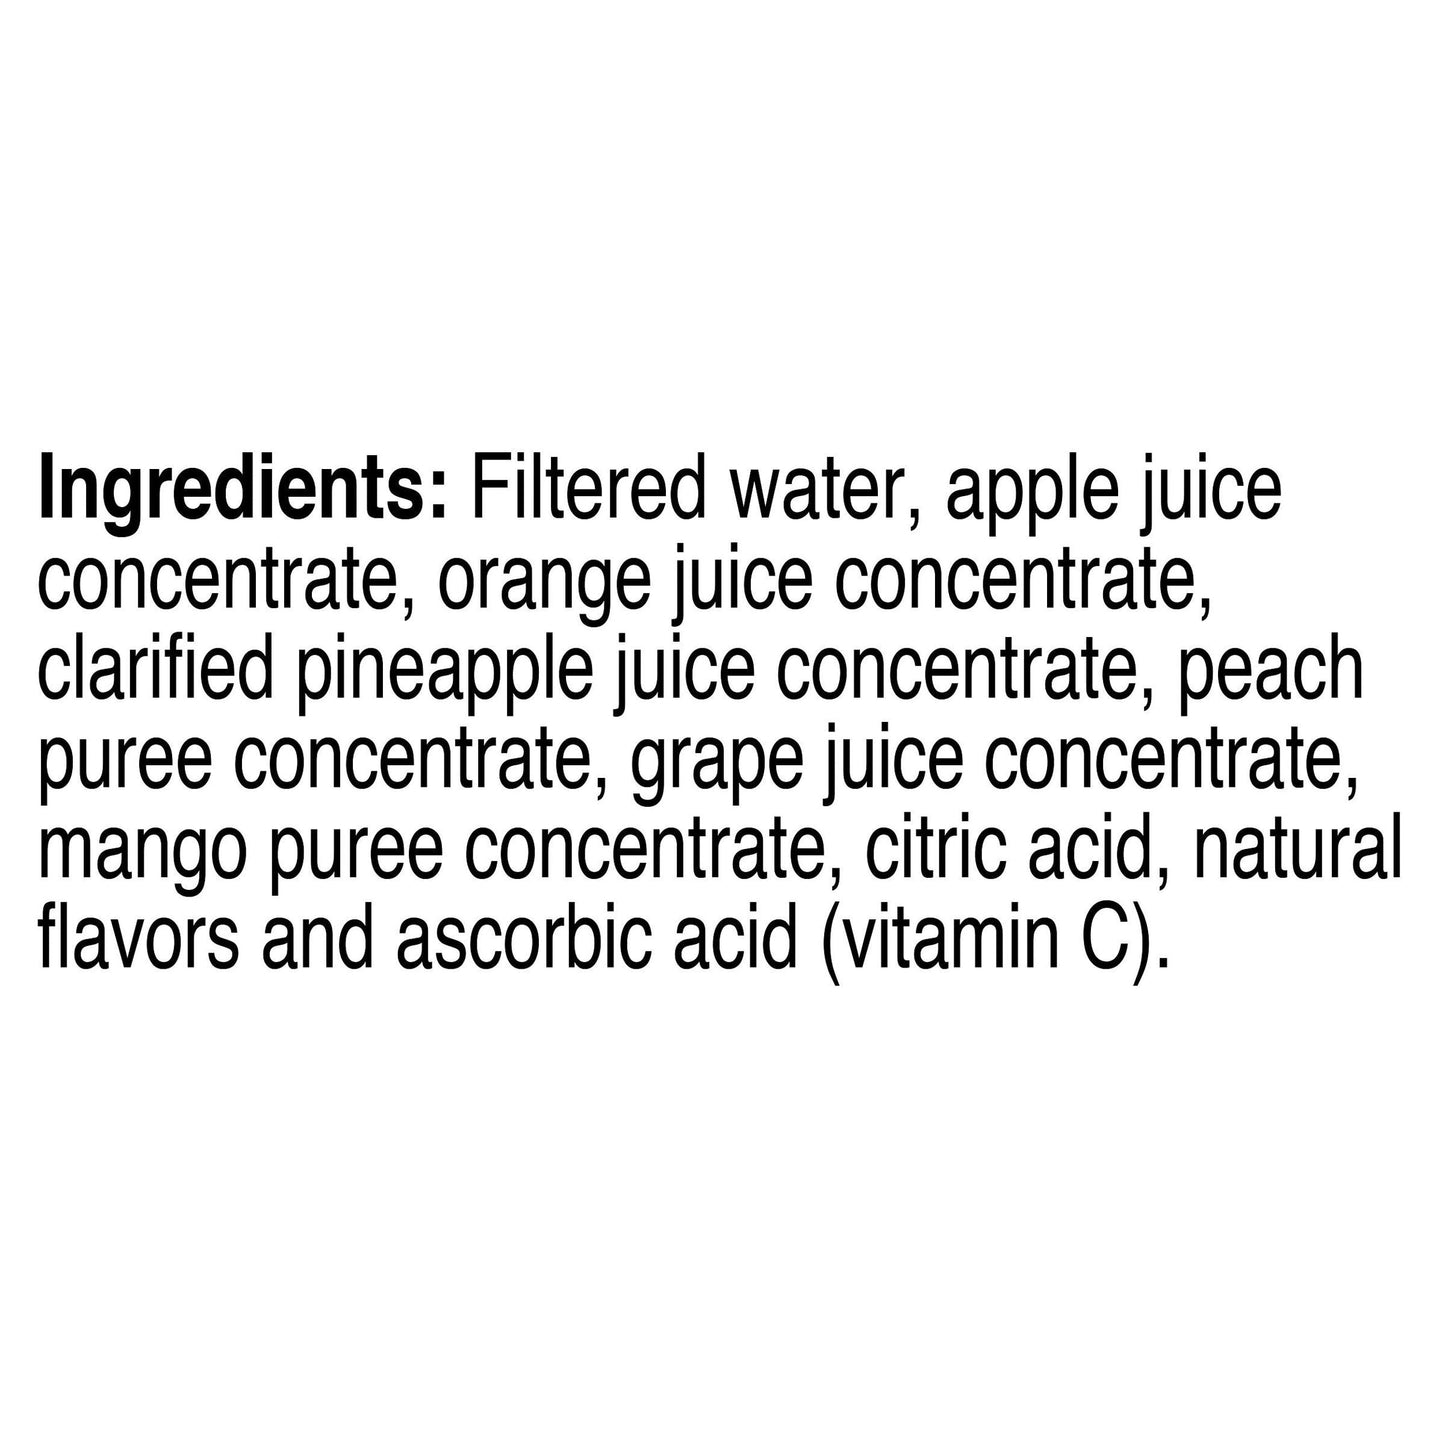 Dole 100% Juice Flavored Blend Of Juices Orange Peach Mango 59 Fl Oz